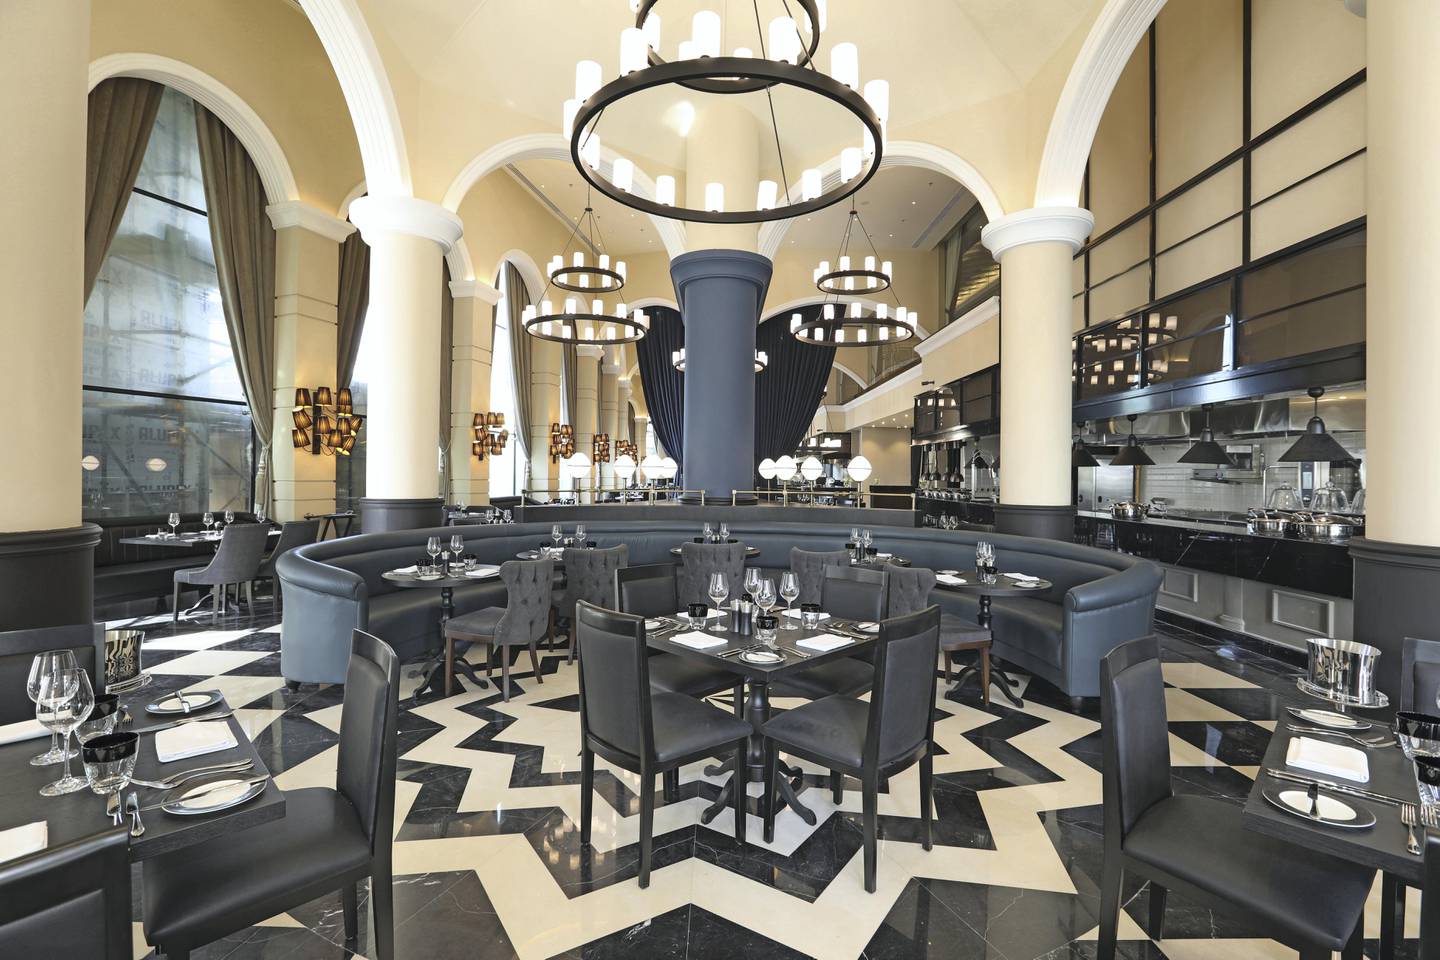 The Great British Restaurant has striking decor and acts as an all-day dining option at Dukes Dubai. Courtesy Dukes Dubai